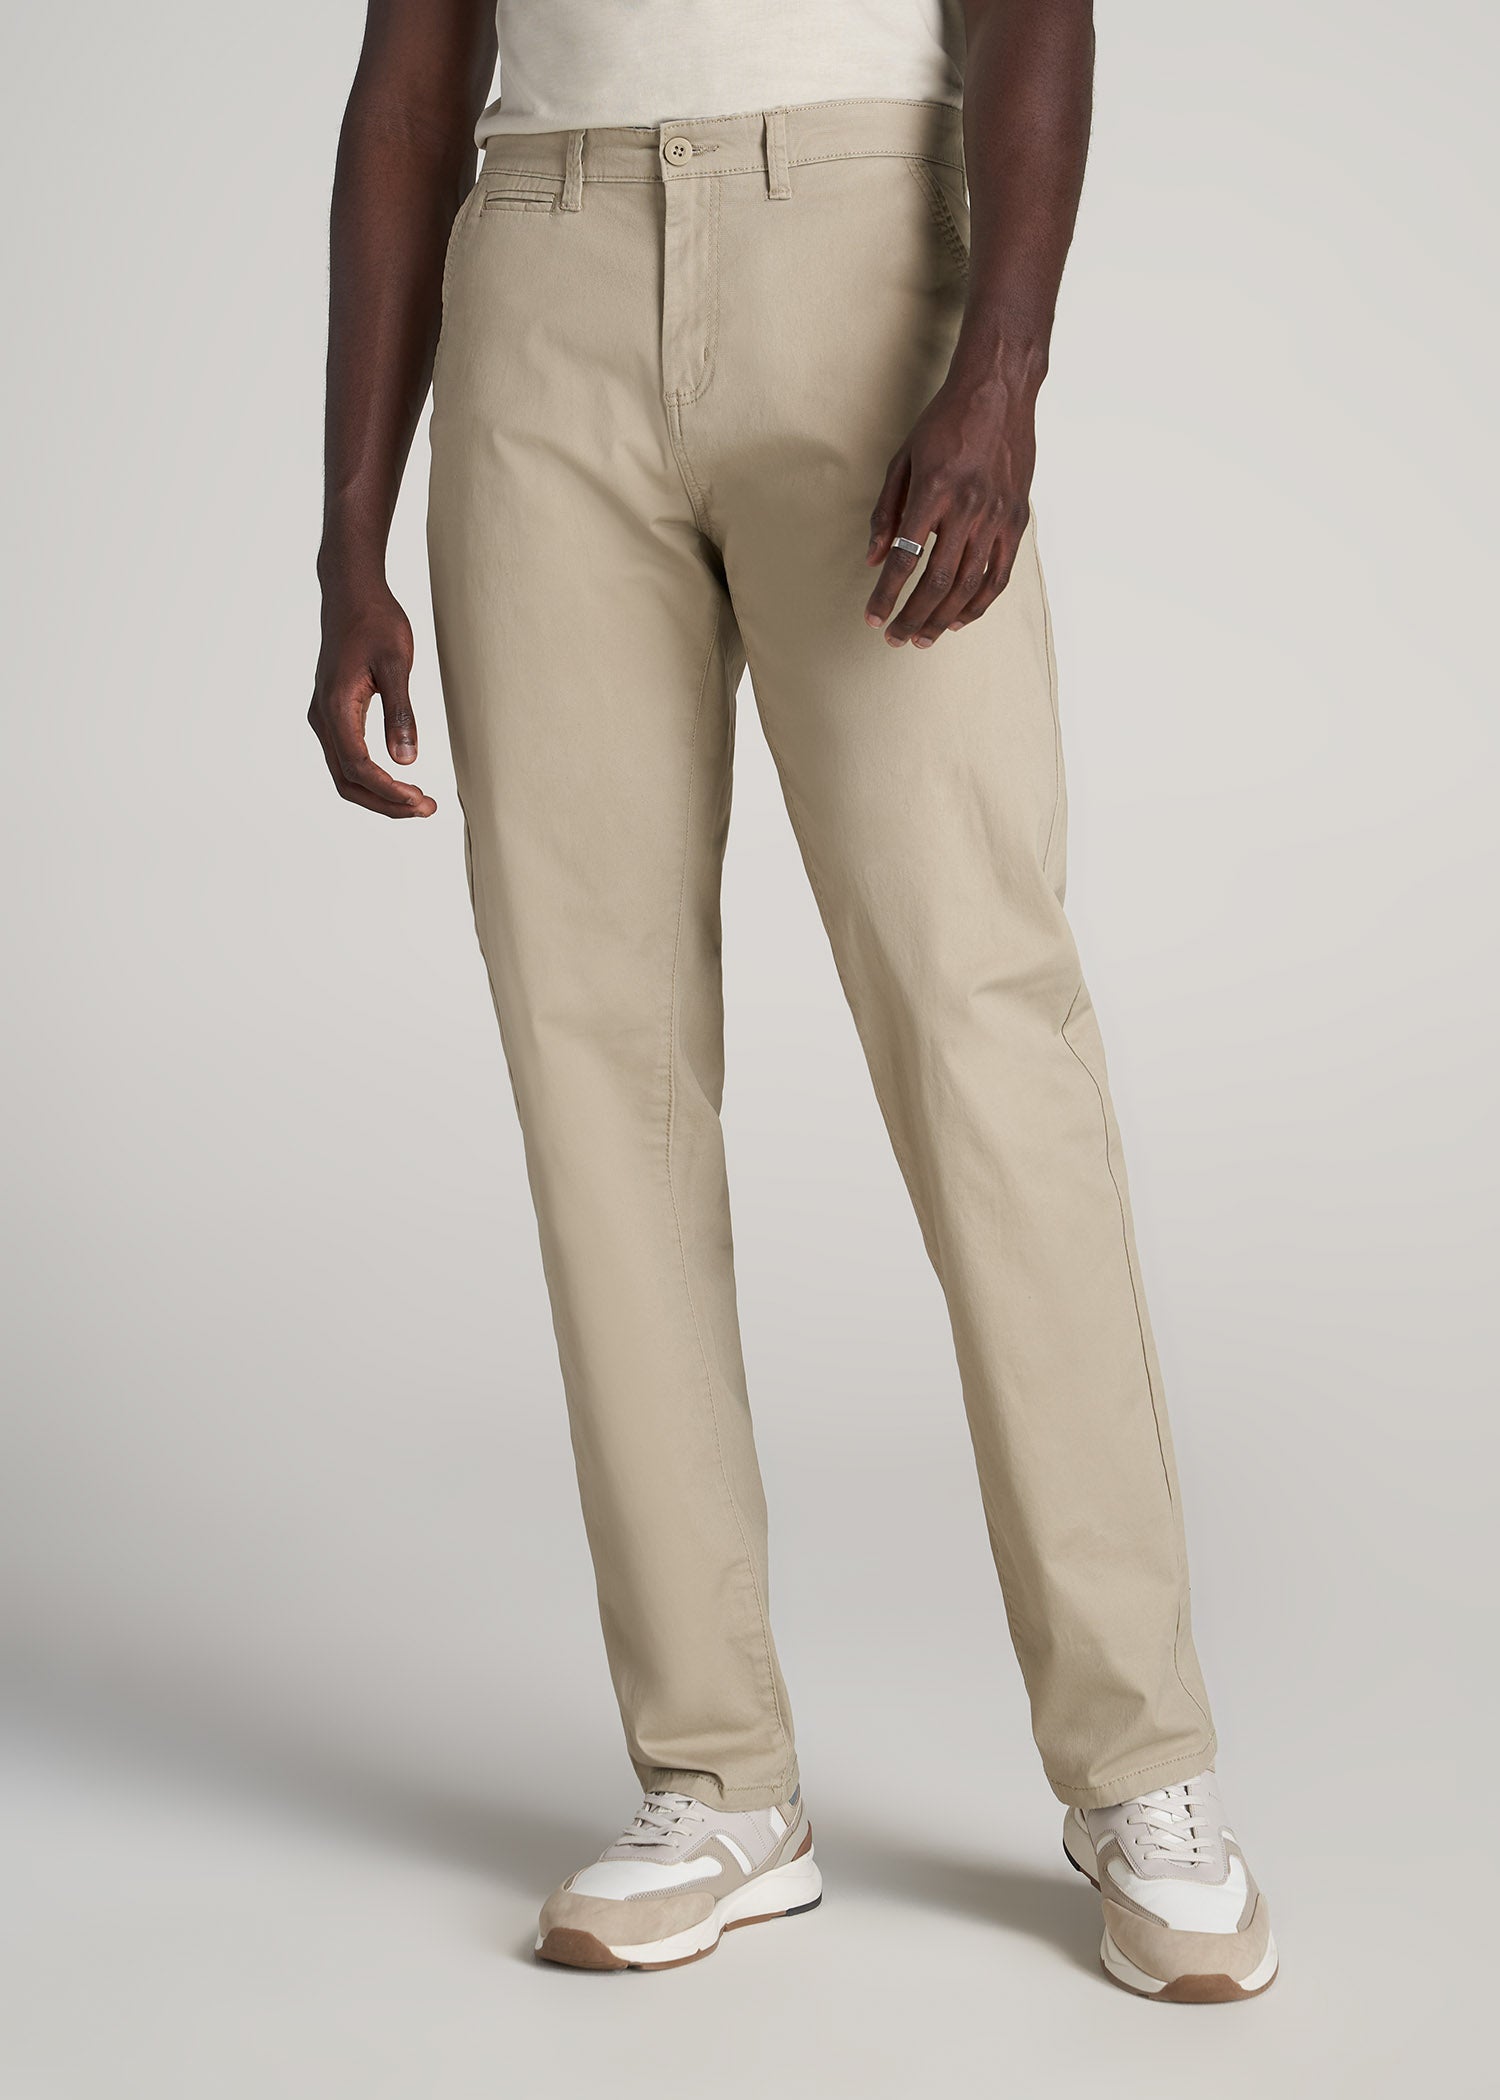 Chino Pants Khaki: Men\'s Tall Mason Relaxed Fit Chino Pants – American Tall